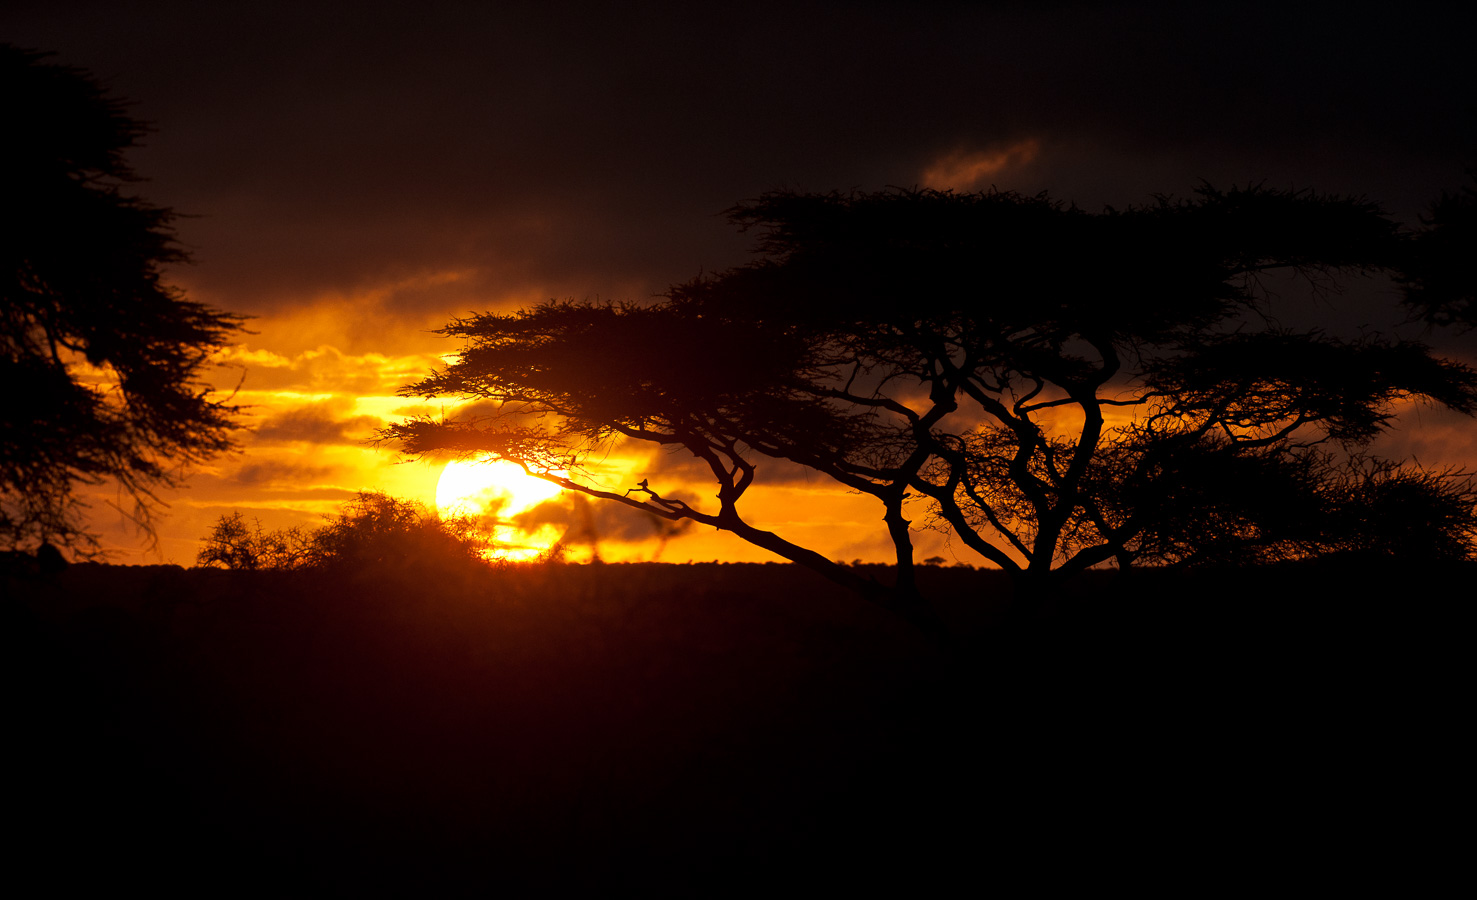 Amboseli National Park [330 mm, 1/2000 sec at f / 6.3, ISO 800]